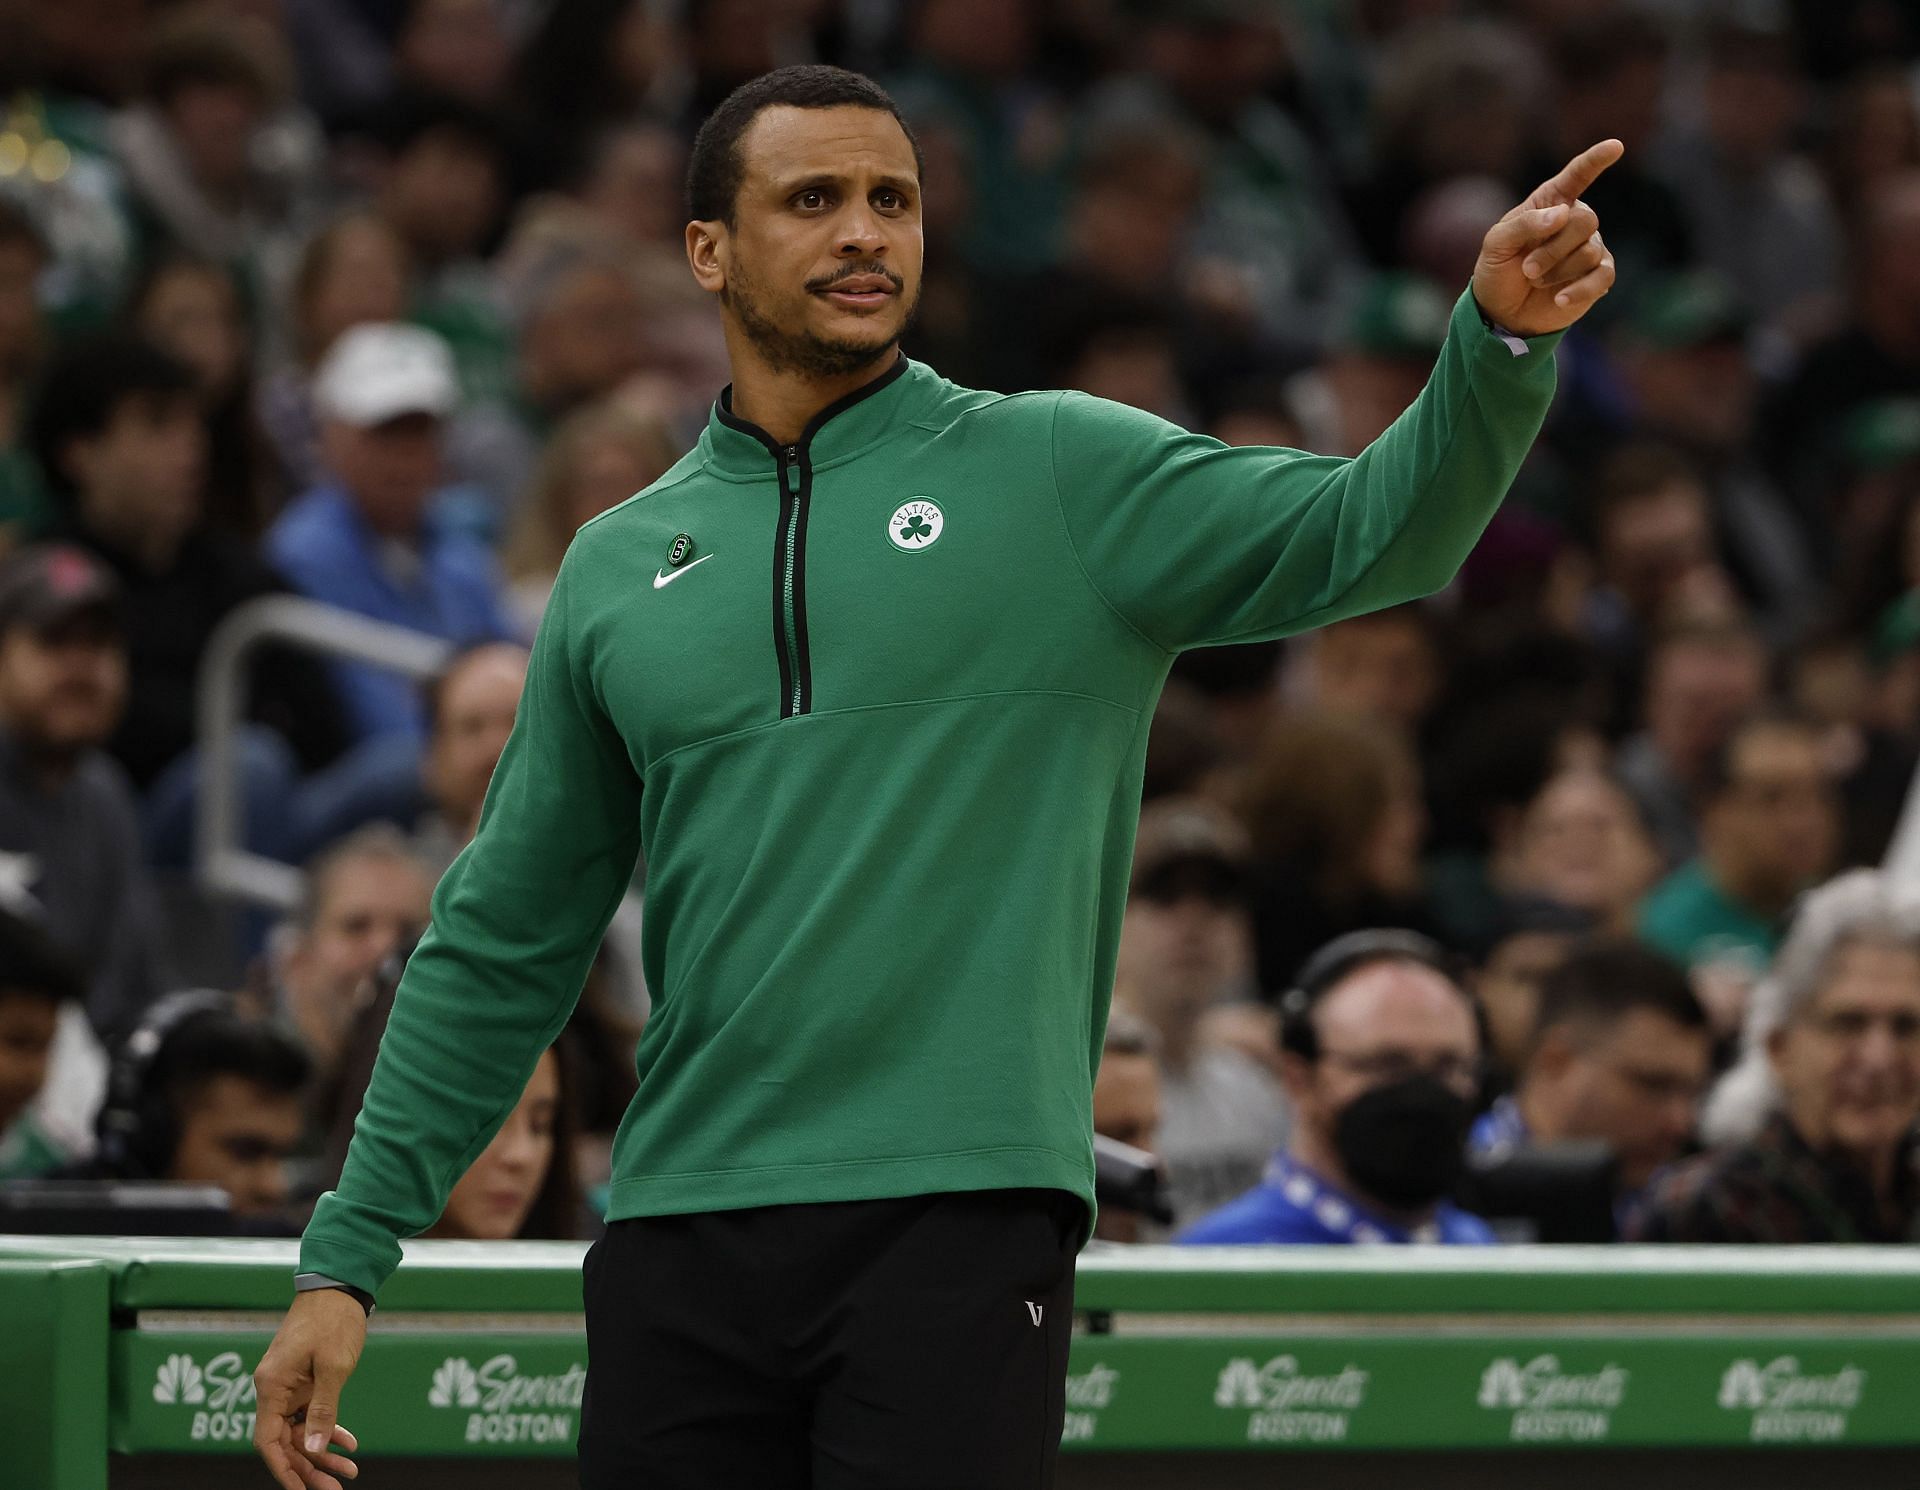 Former WVU hoops star Joe Mazzulla named Boston Celtics head coach